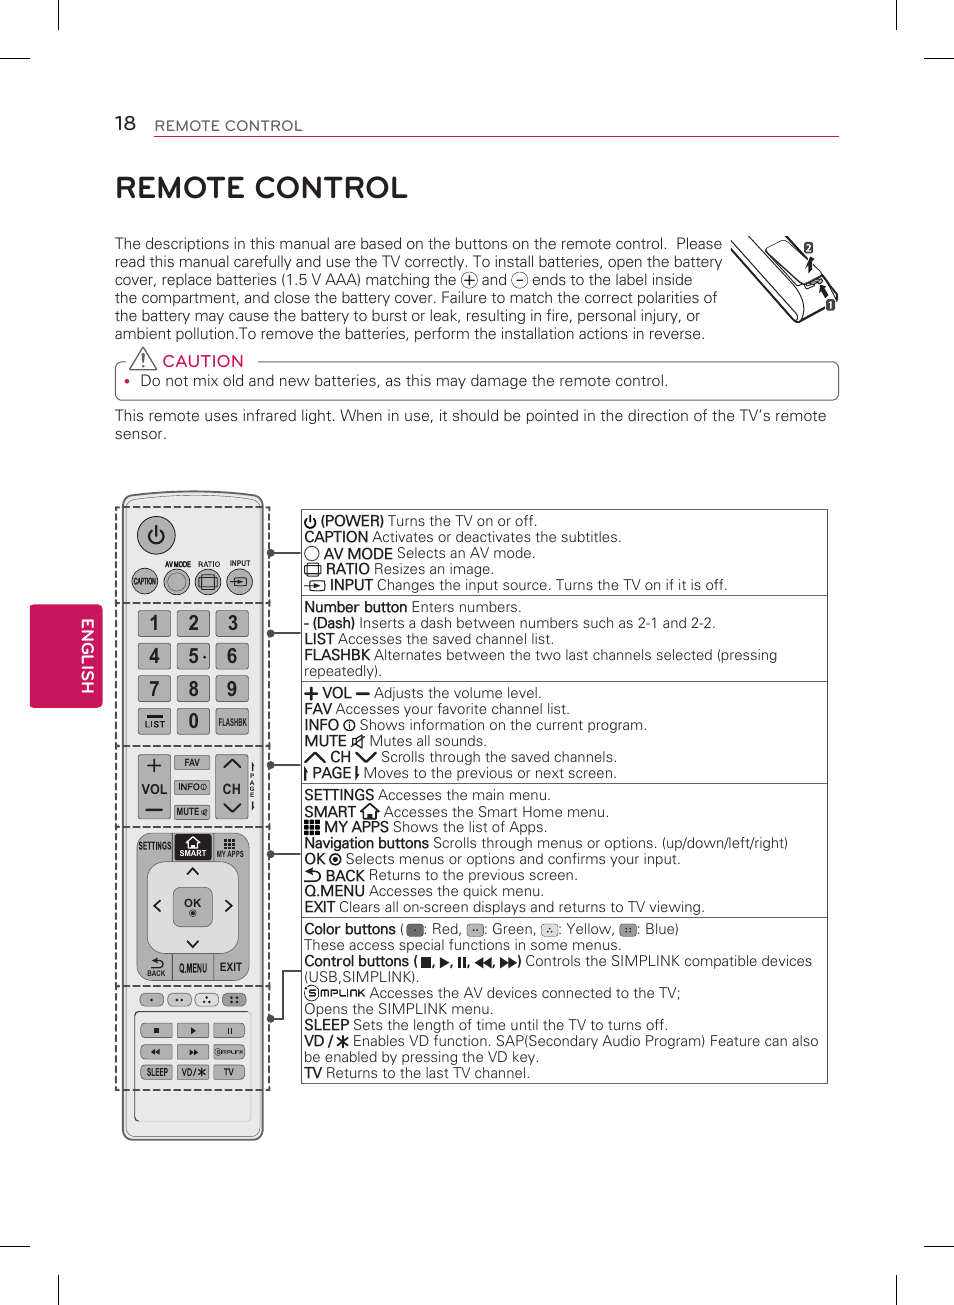 Remote control | LG 60LB6100 User Manual | Page 18 / 24